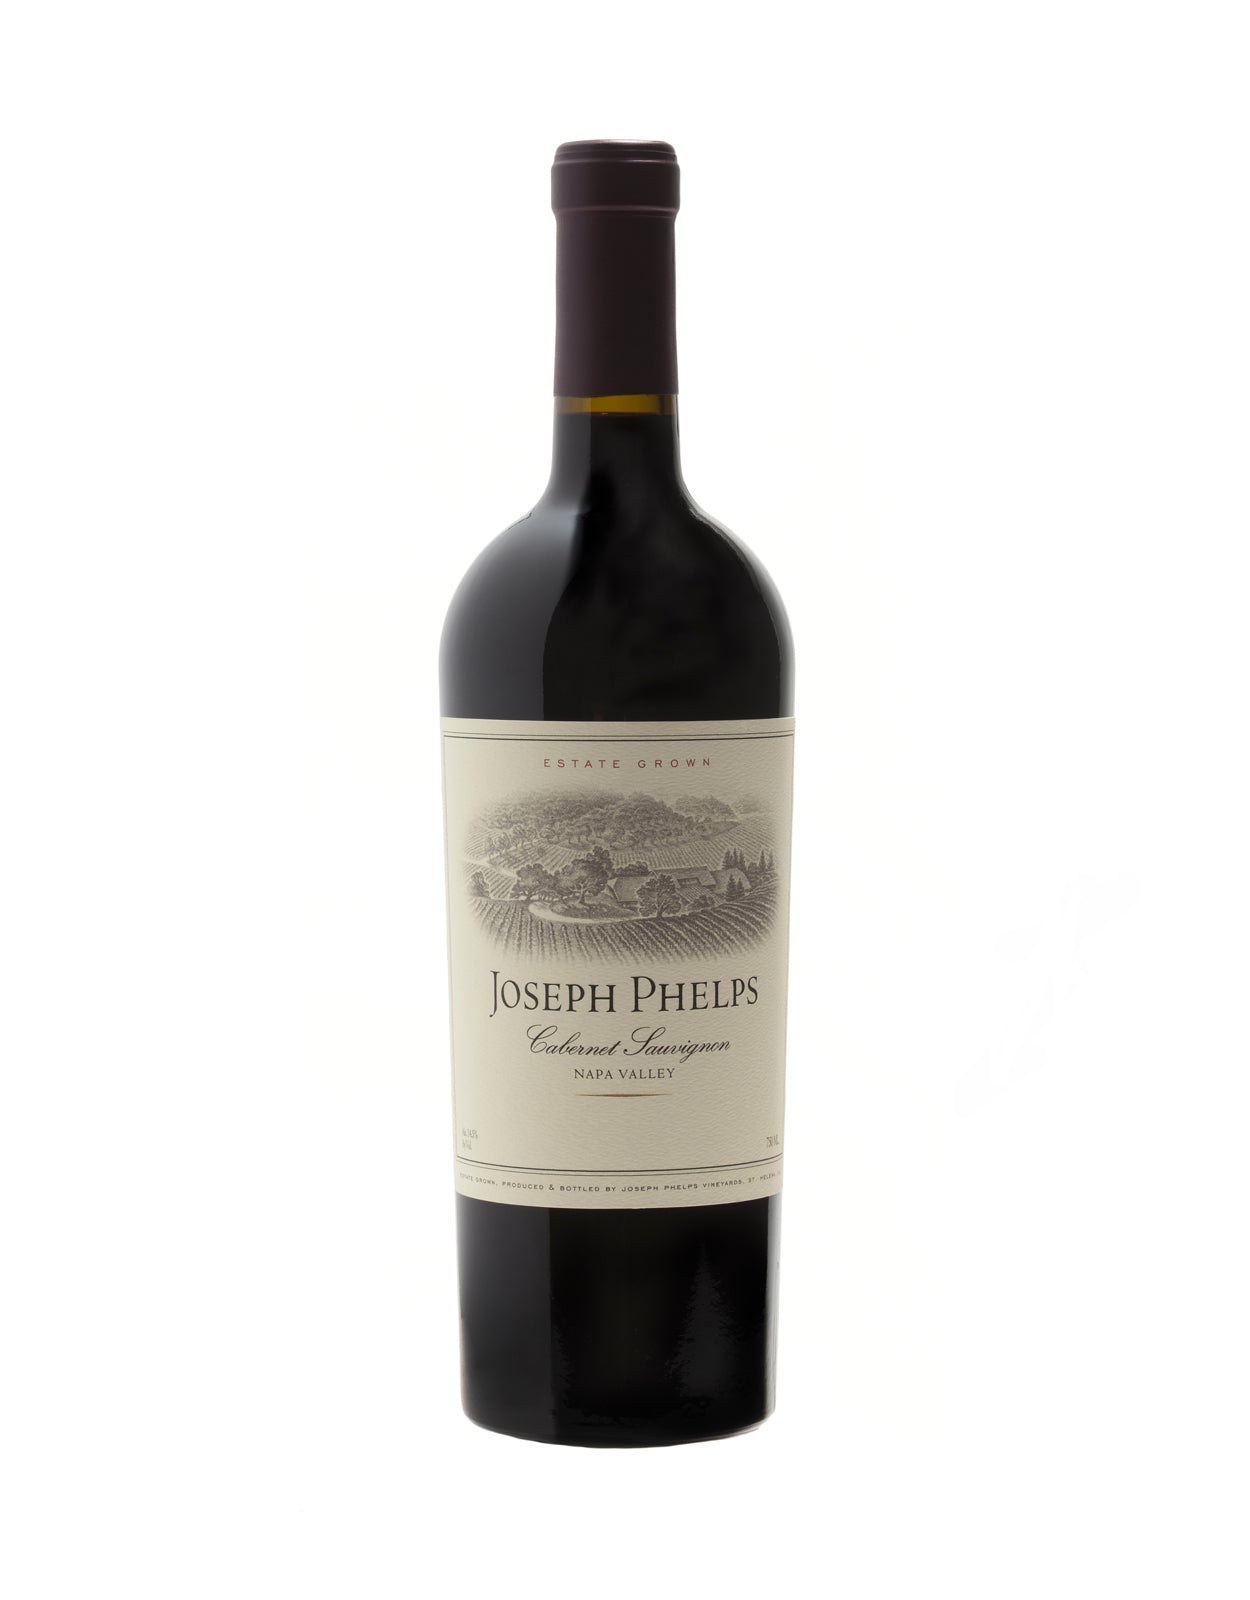 Joseph Phelps Cabernet Sauvignon Napa Valley 2019 - 1.5 Litre Bottle